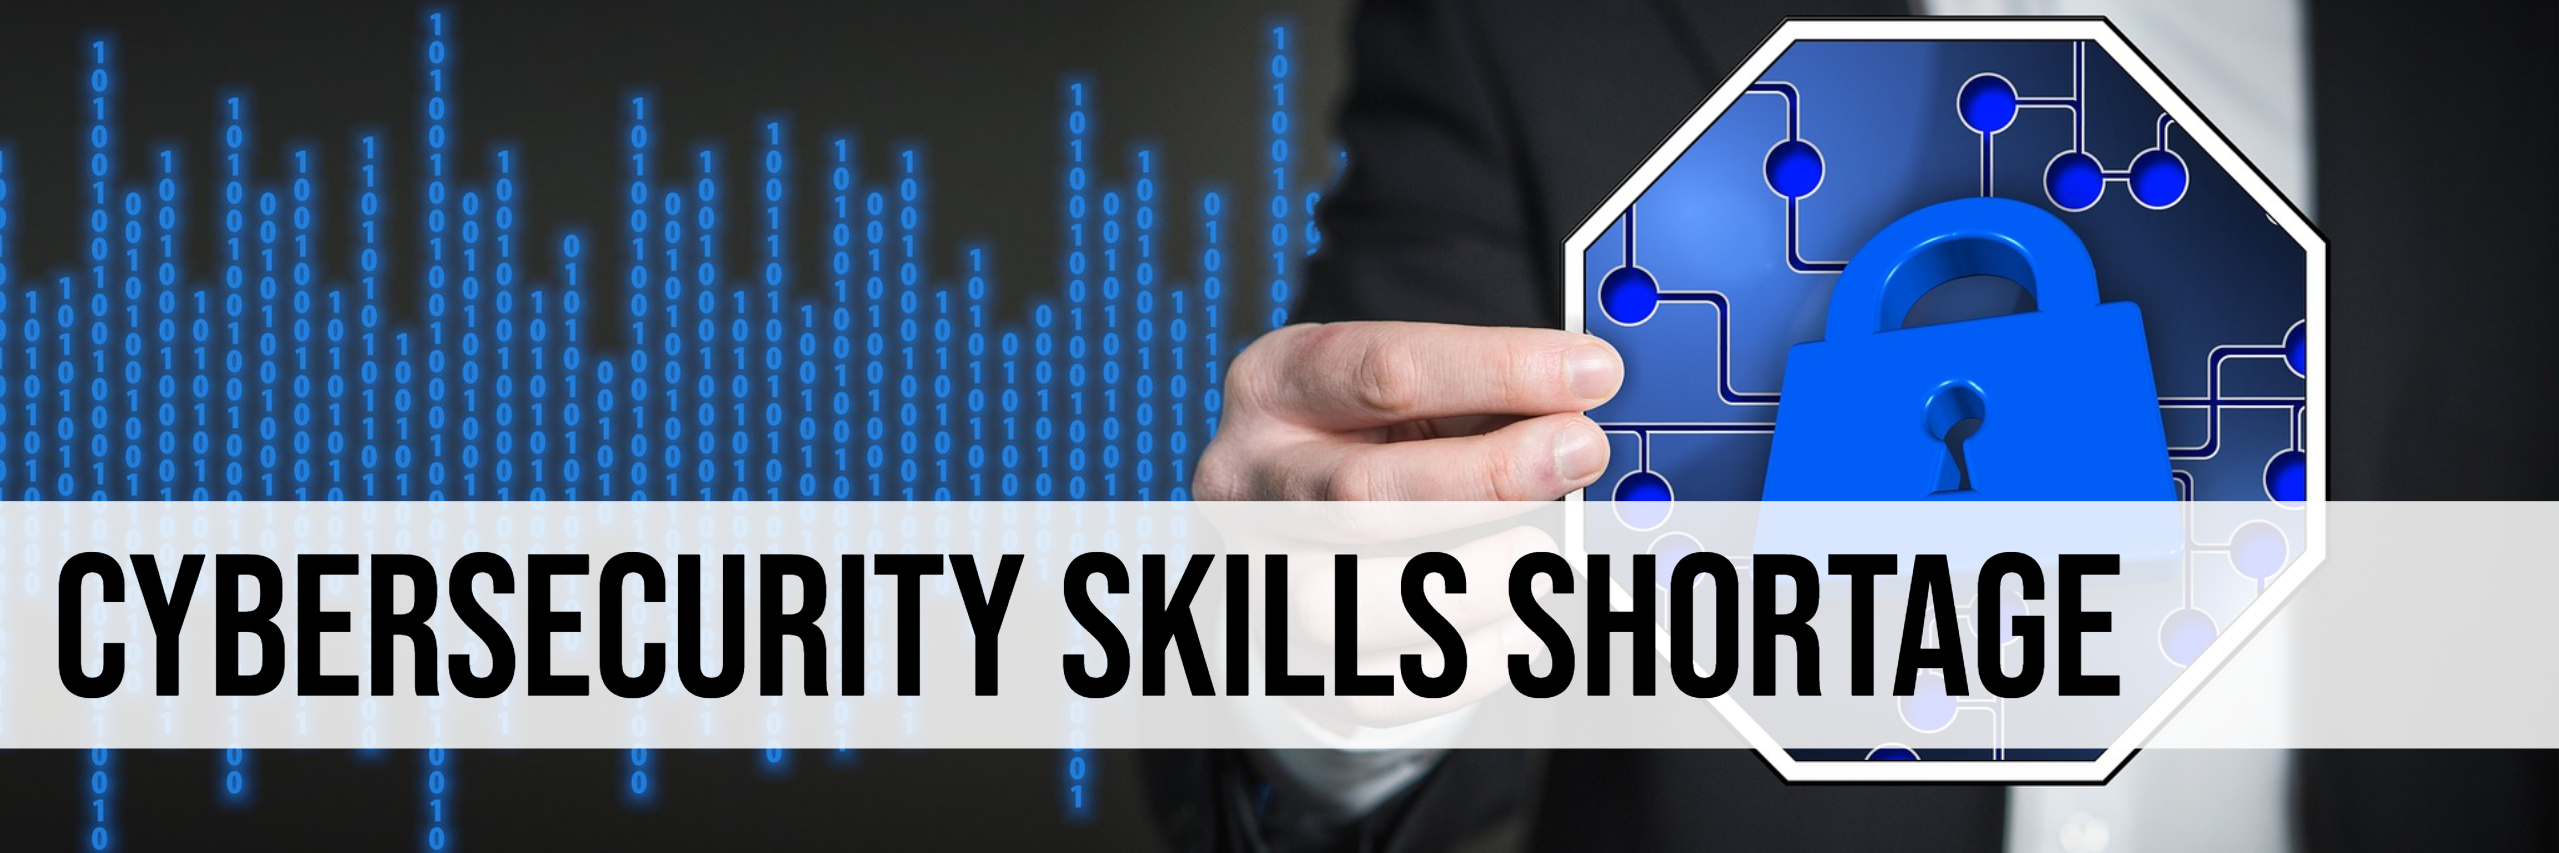 WhitakerIT_Cybersecurity Skills Shortage